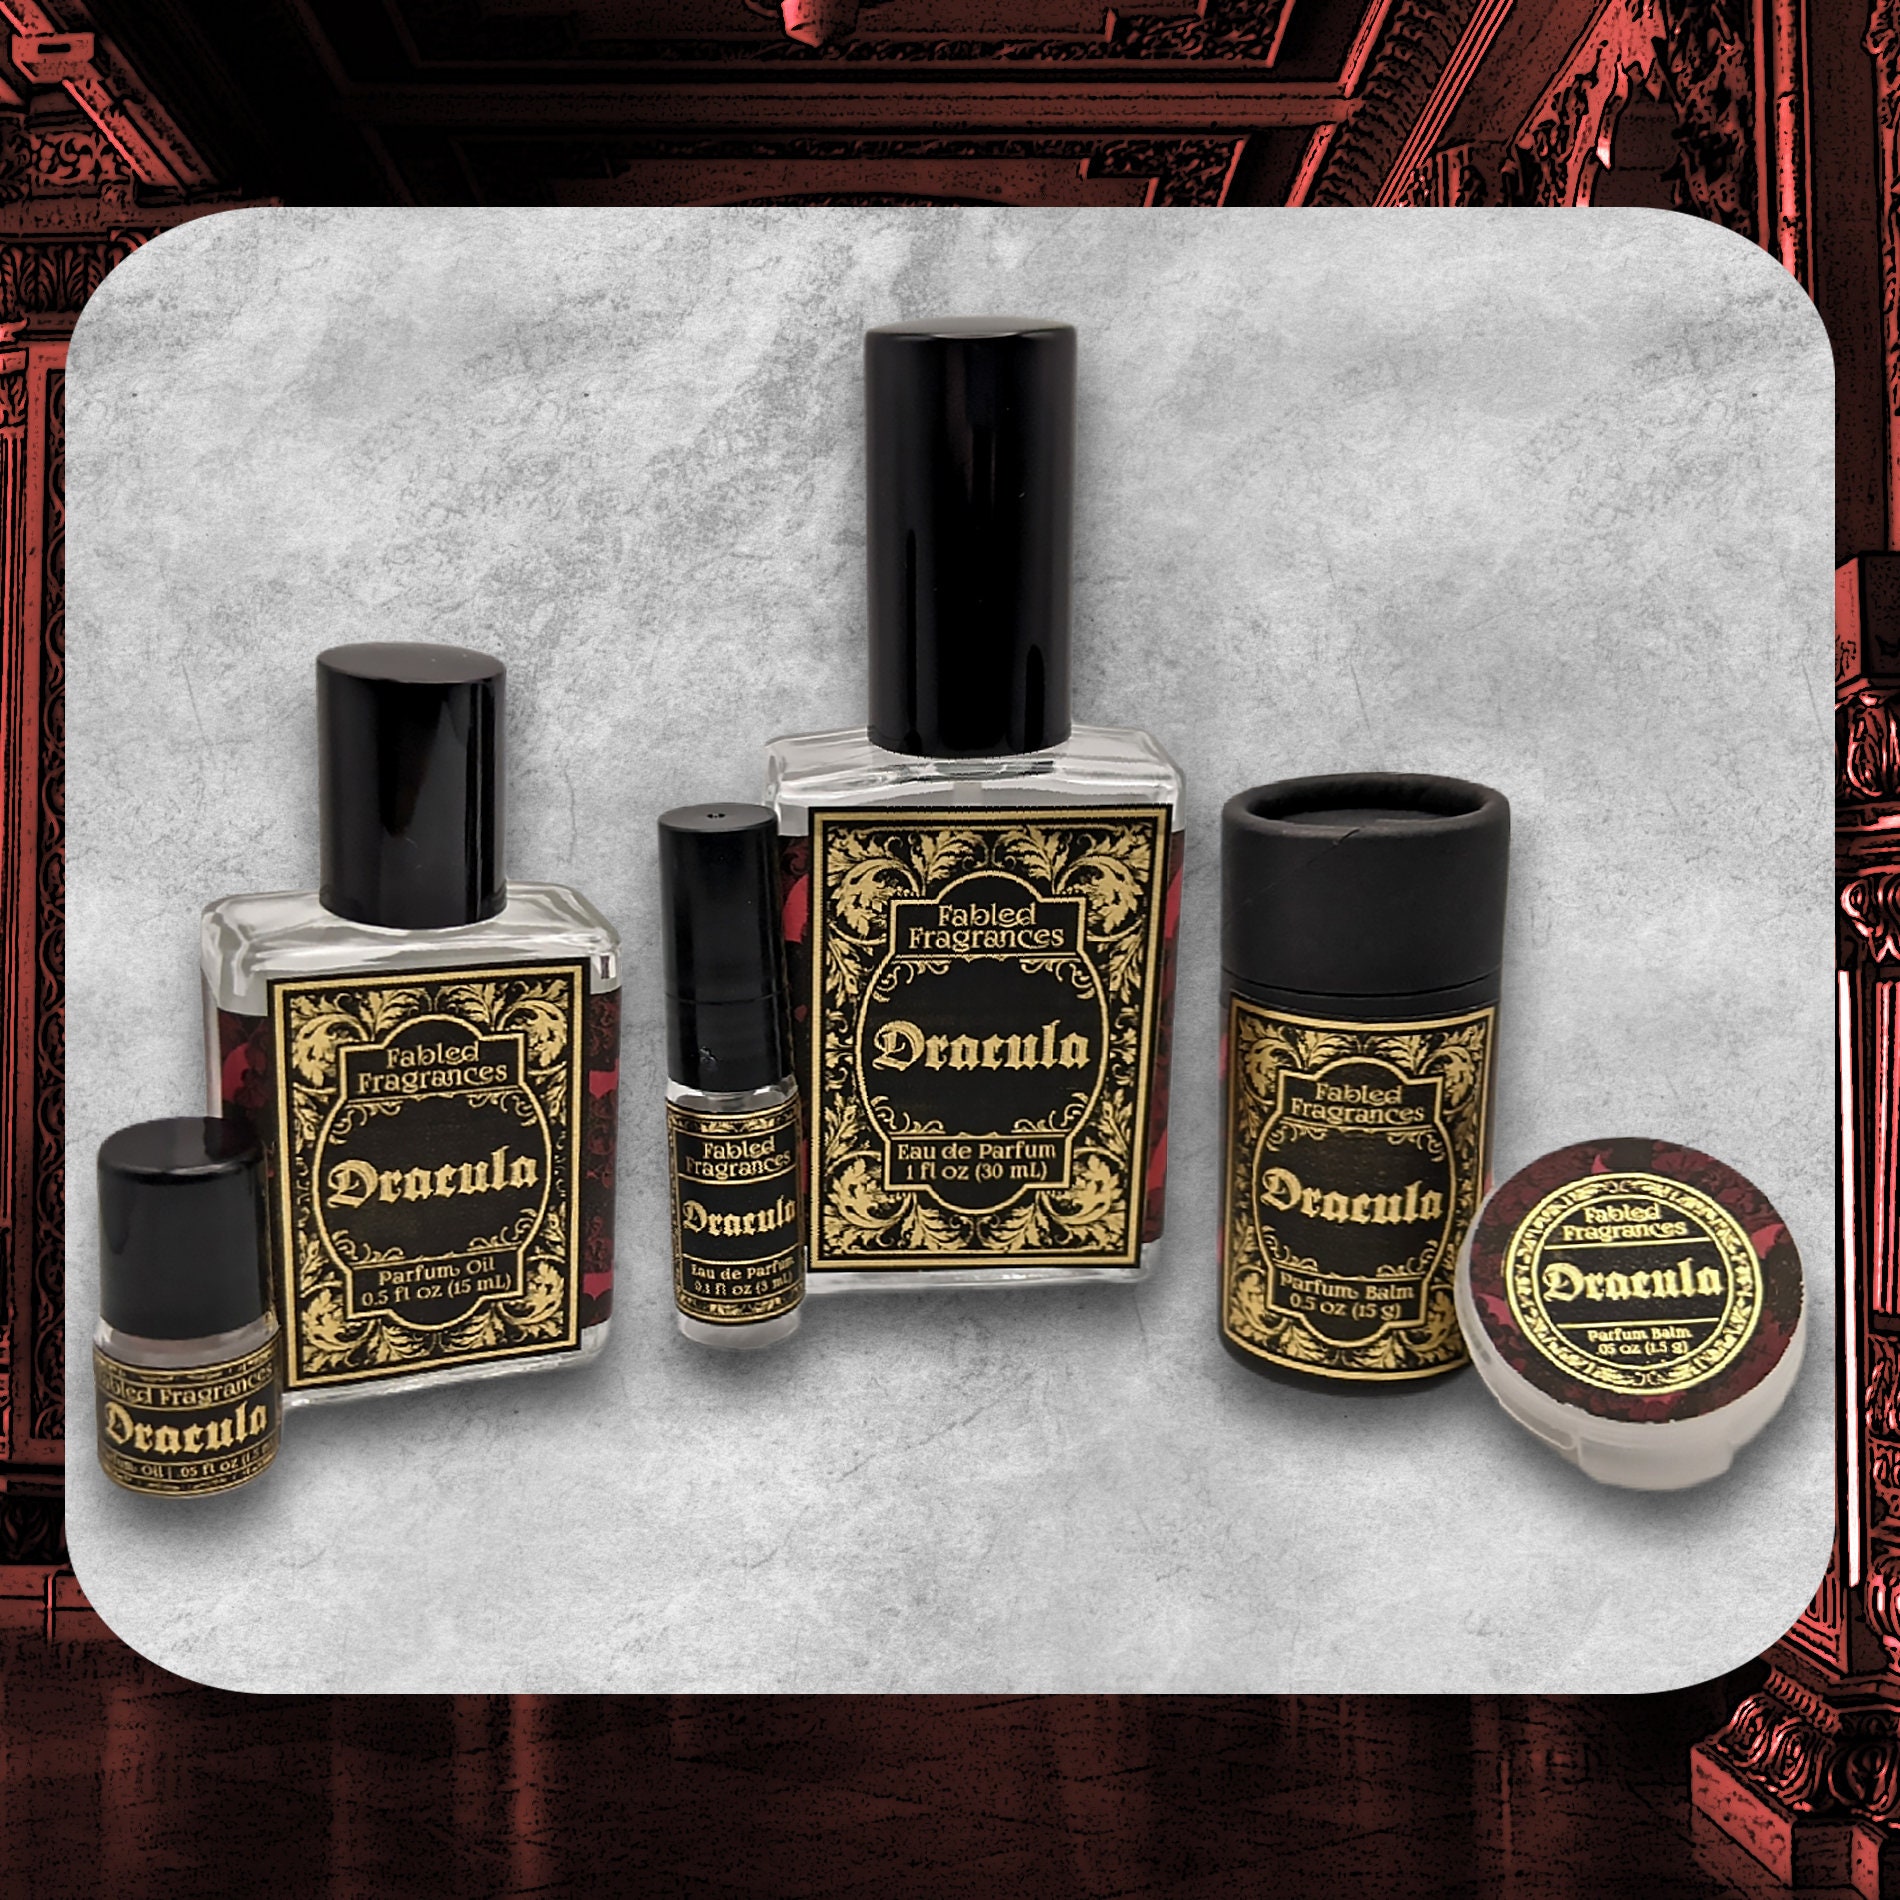 Dragon's Blood Perfume Oil for Perfume Making, Personal Body Oil, Soap –  PERFUME STUDIO